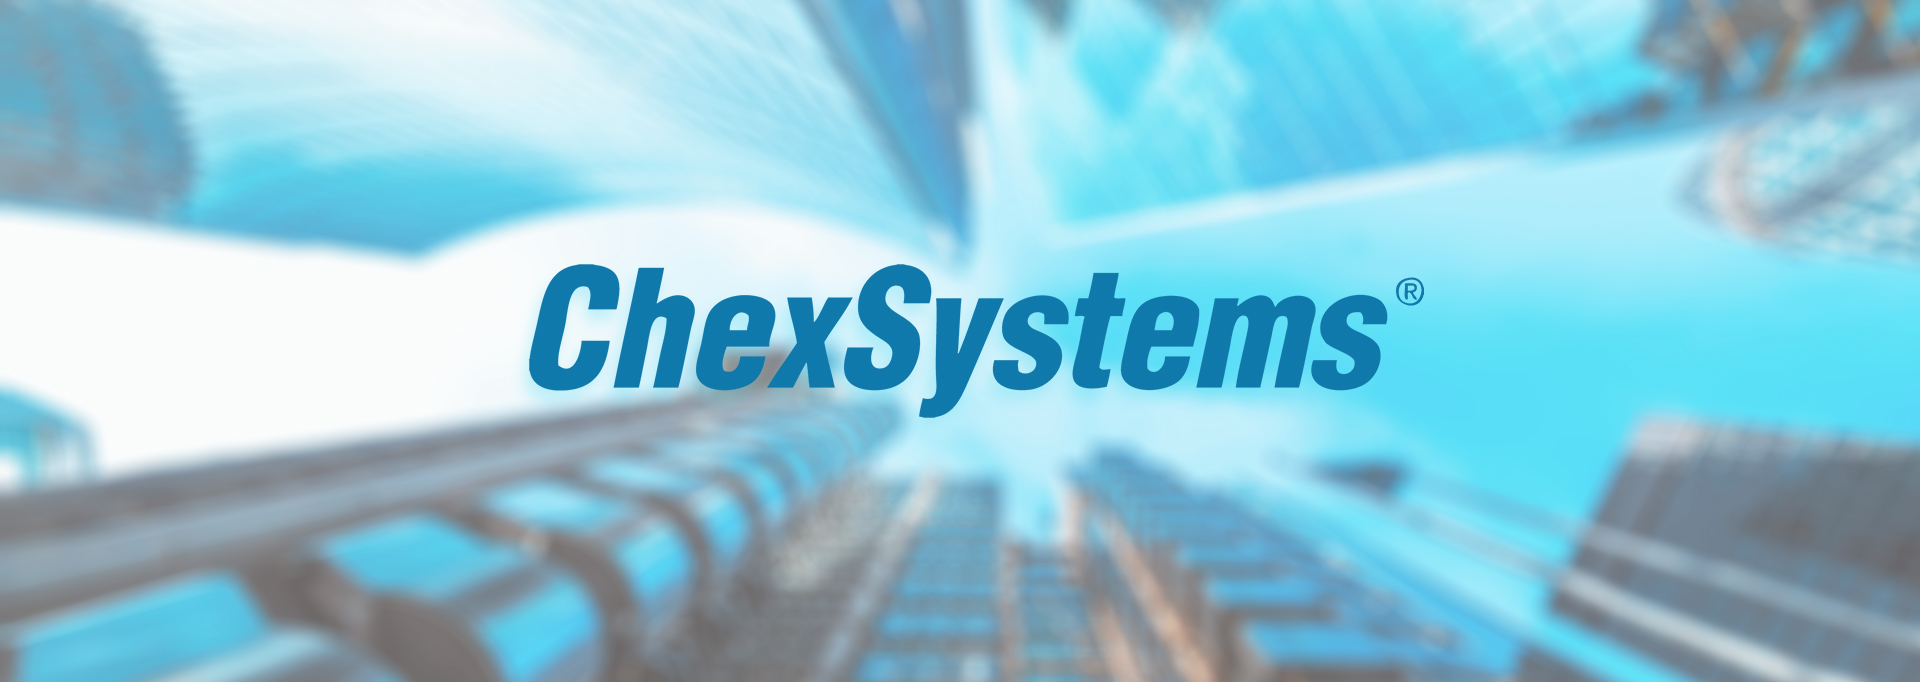 ChexSystems logo and bank buidings